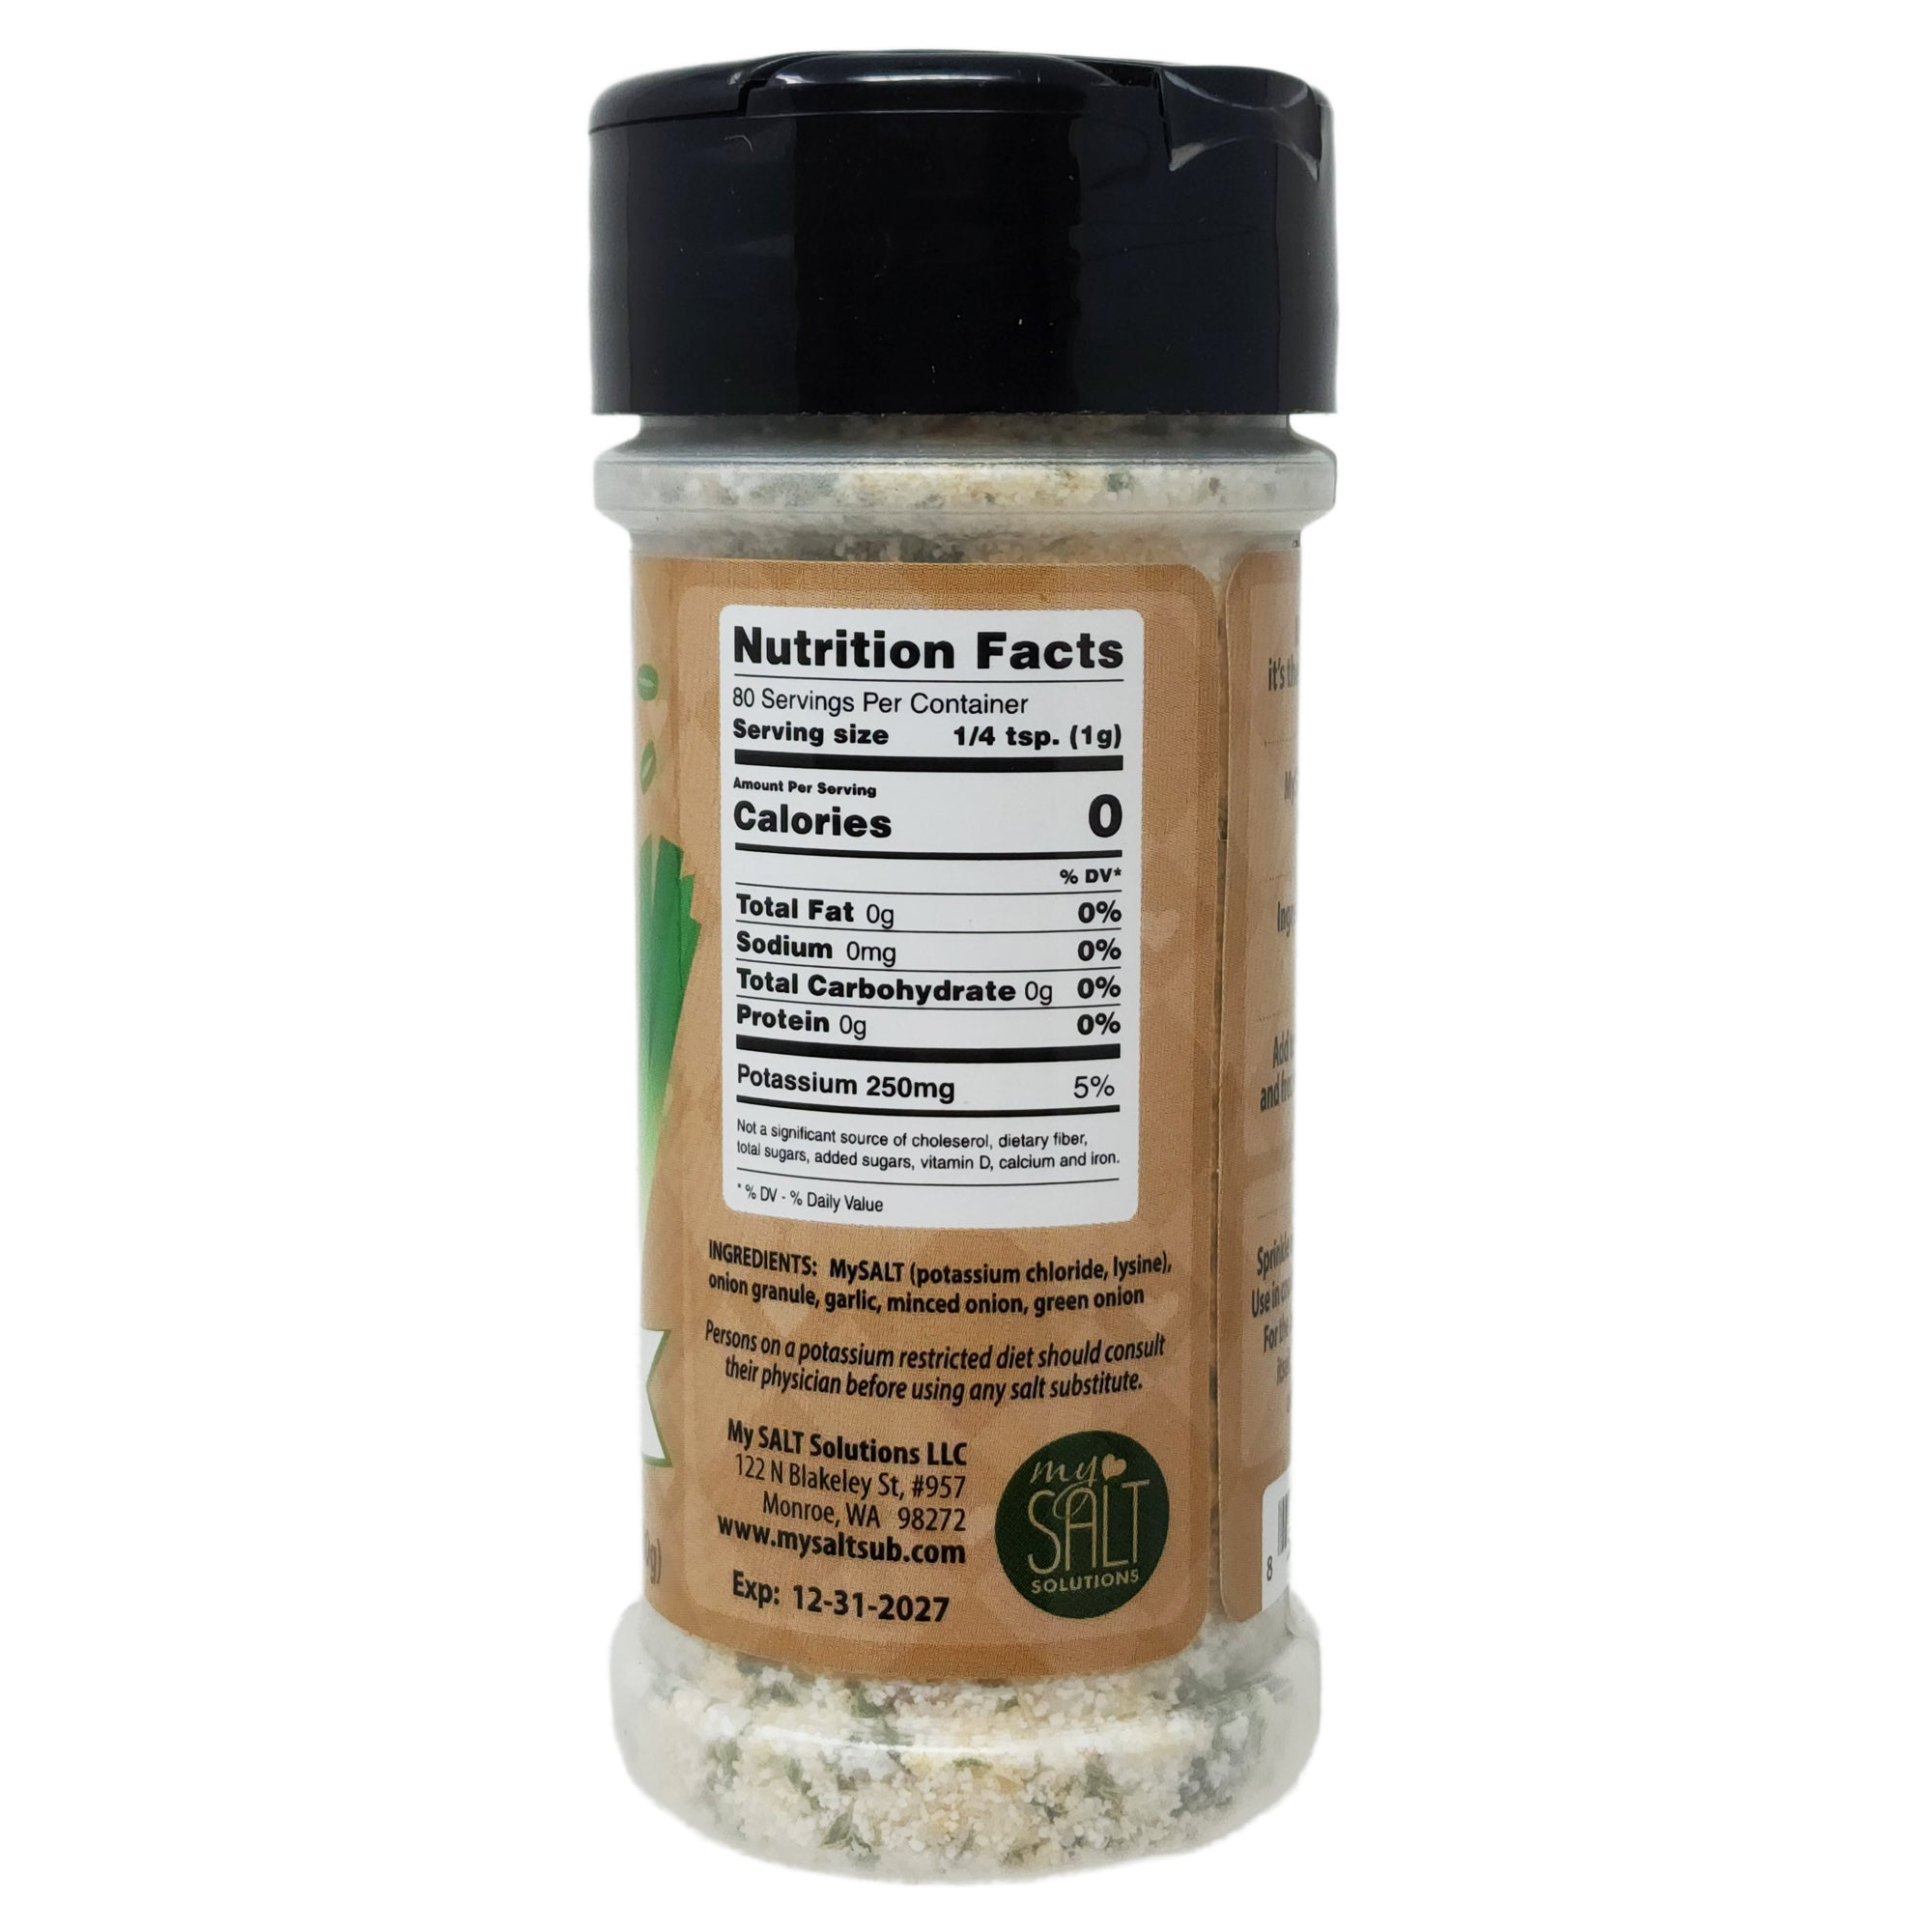 Salt Substitutes - Your Choice Nutrition